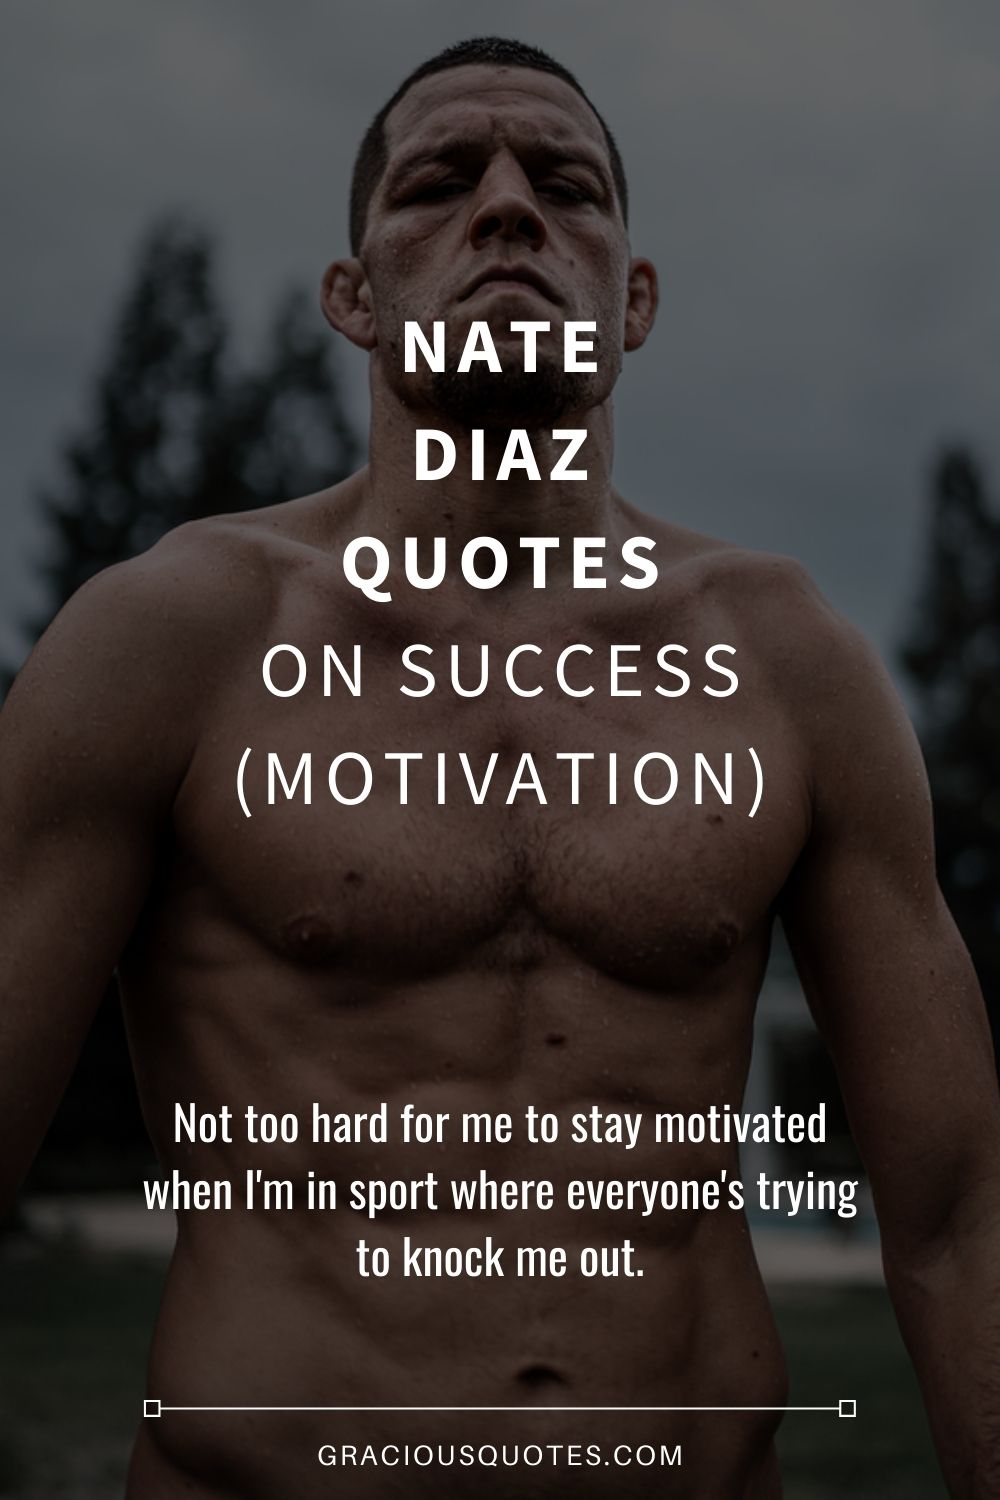 Nate Diaz Quotes on Success (MOTIVATION) - Gracious Quotes